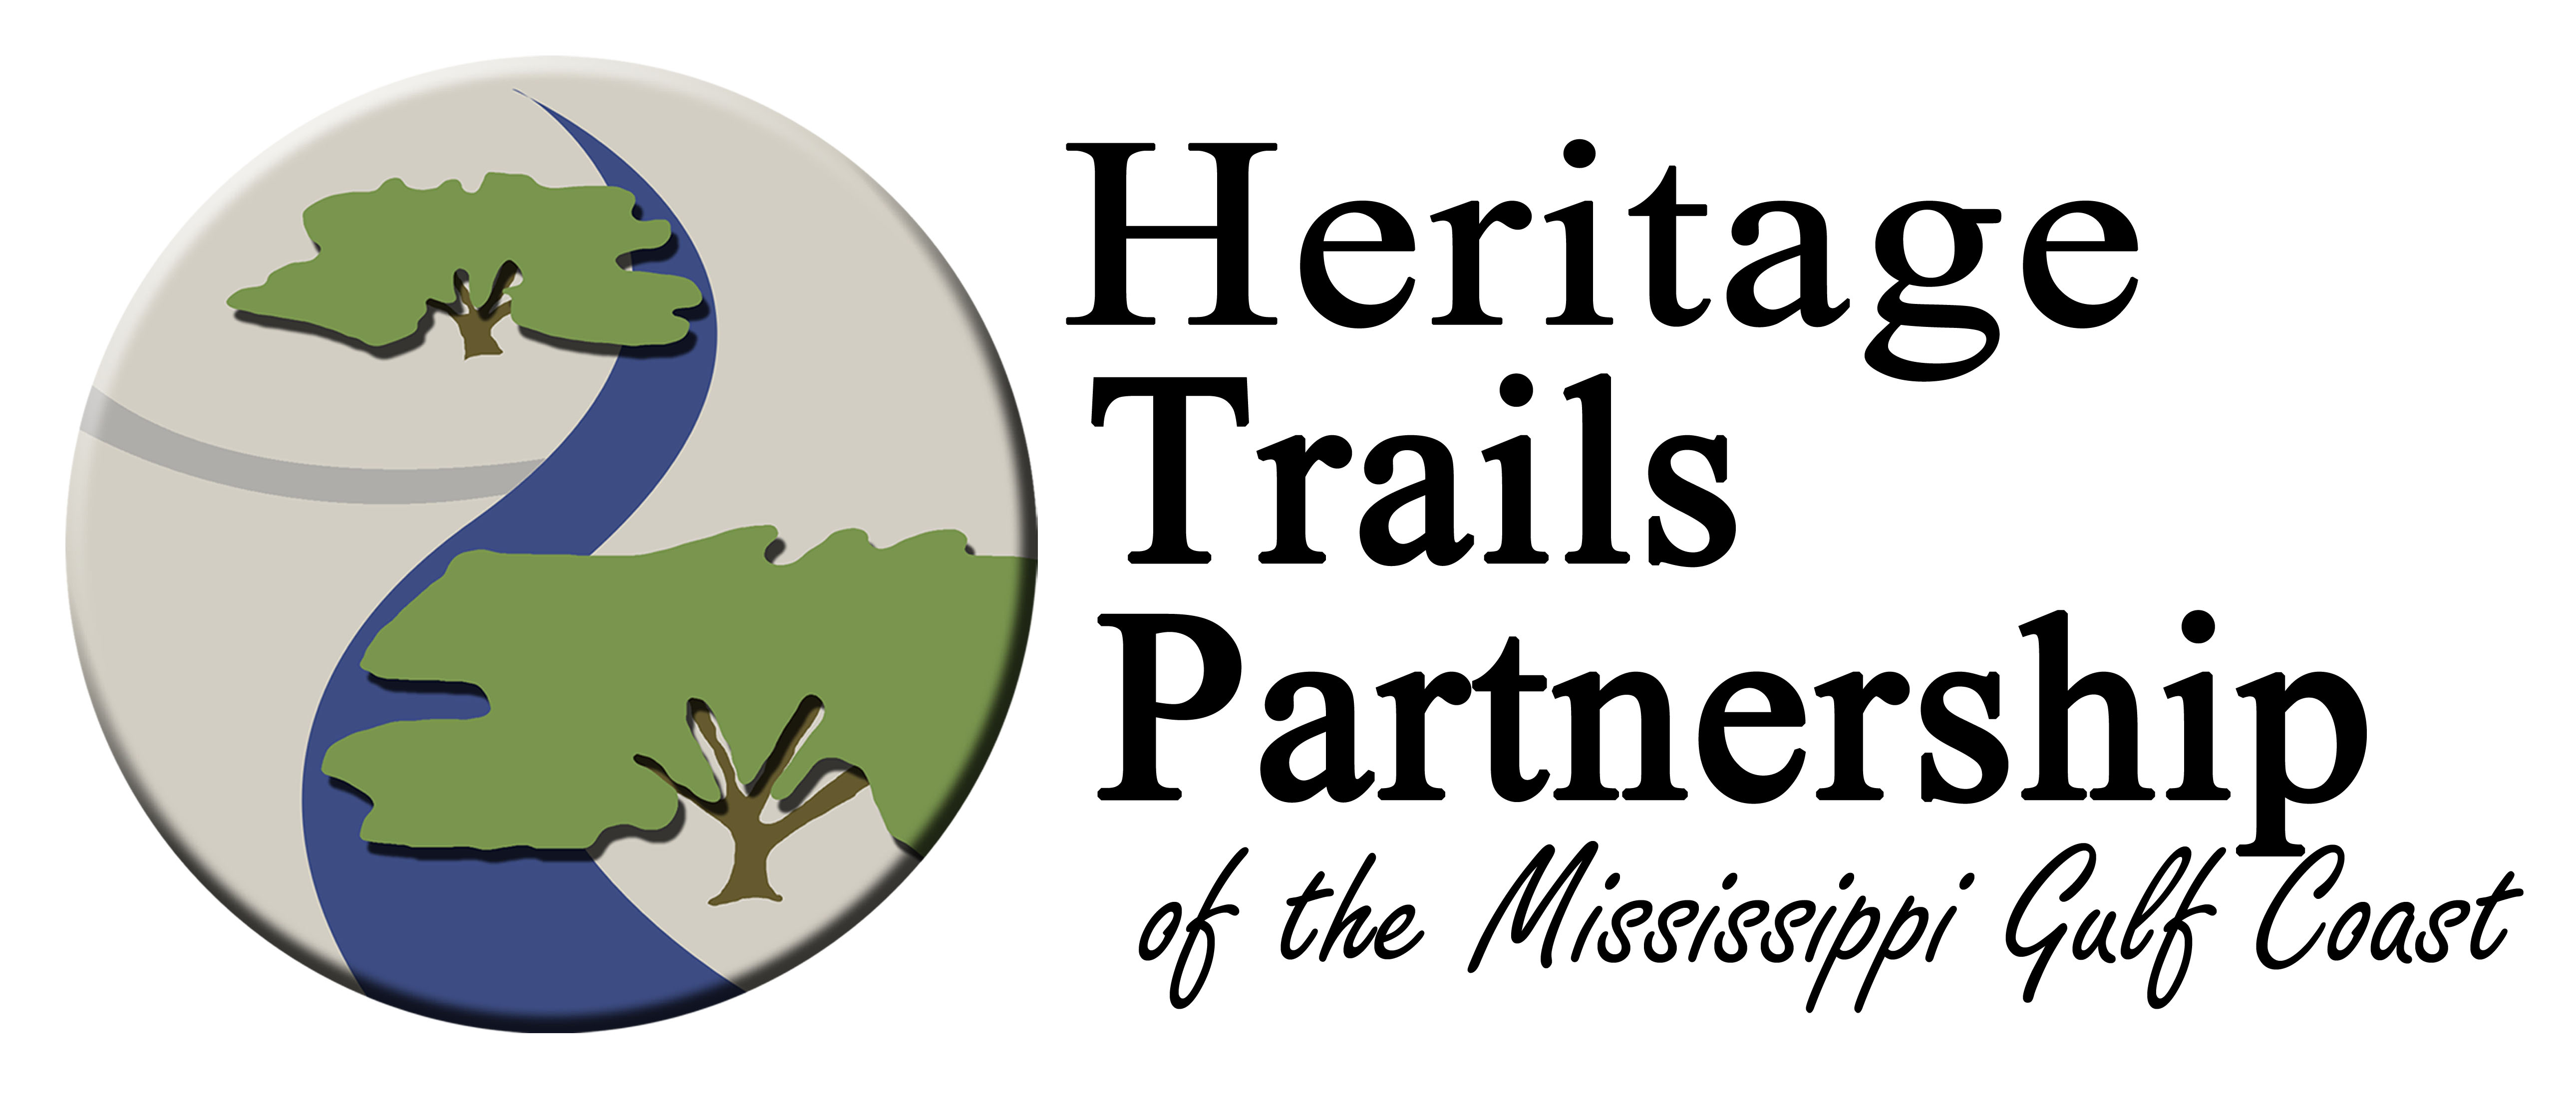 Heritage Trails Partnership of the MS Gulf Coast